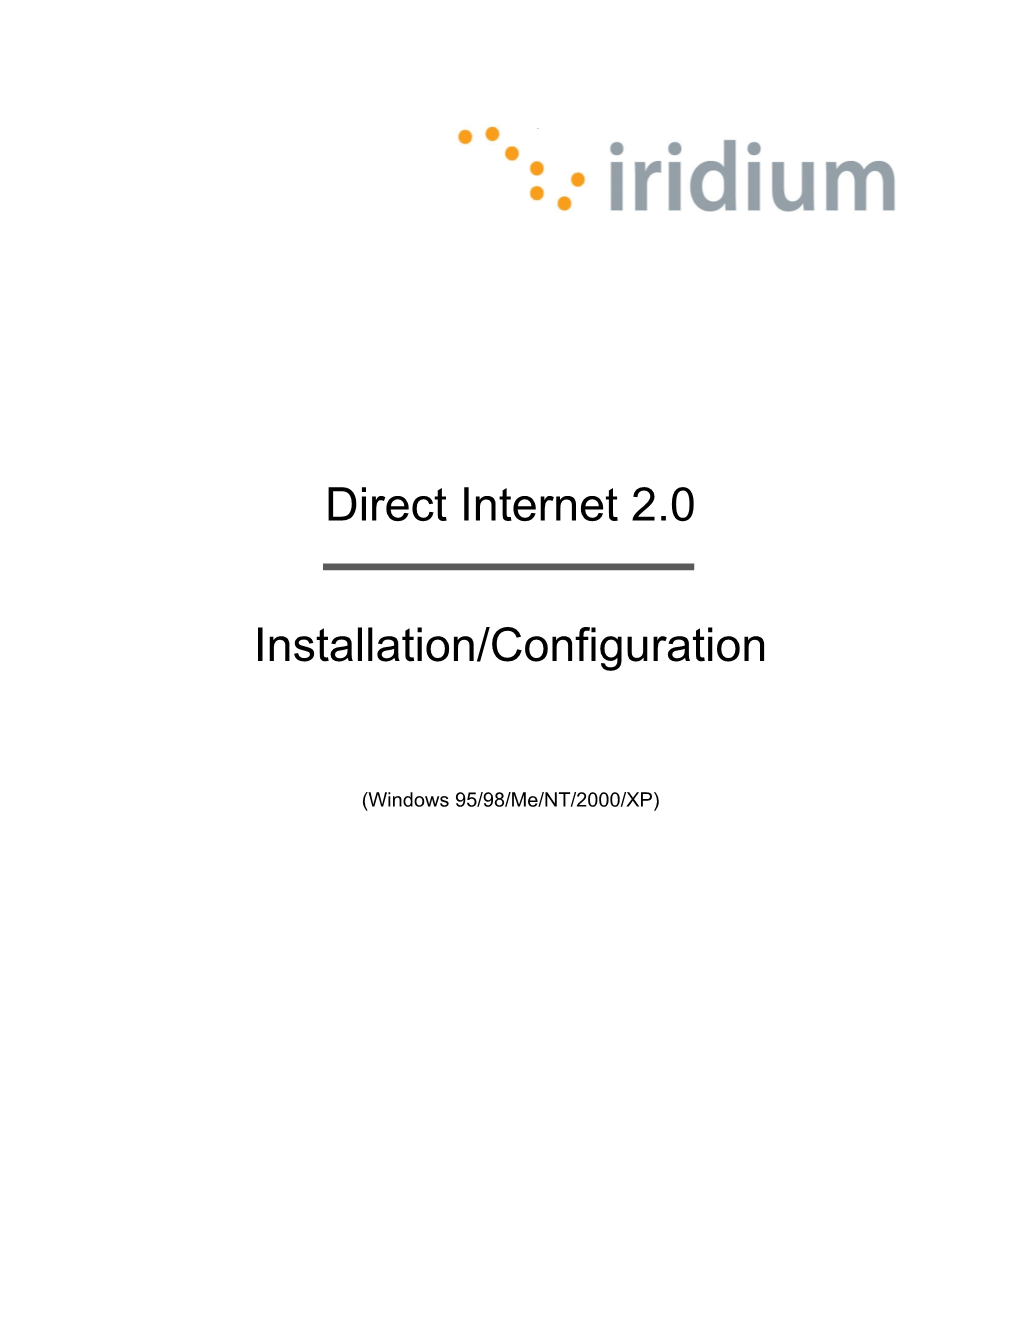 Direct Internet 2.0 Installation/Configuration